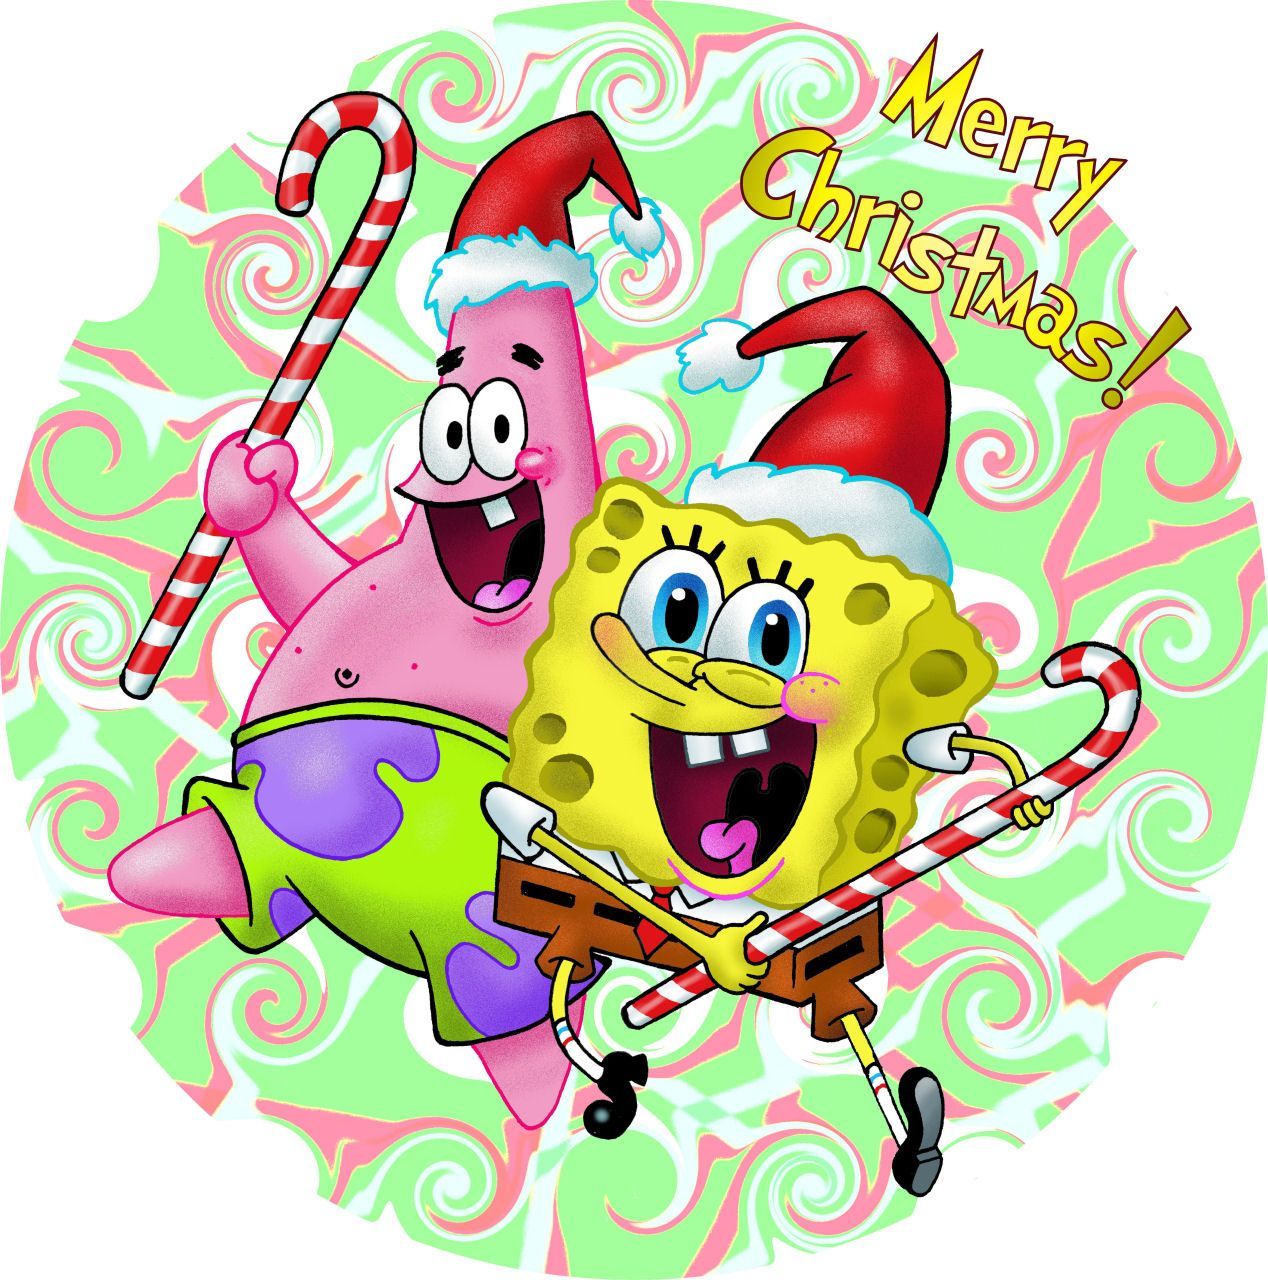 spongebob wallpaper christmas. Cartoon wallpaper, Christmas cartoon characters, Spongebob christmas